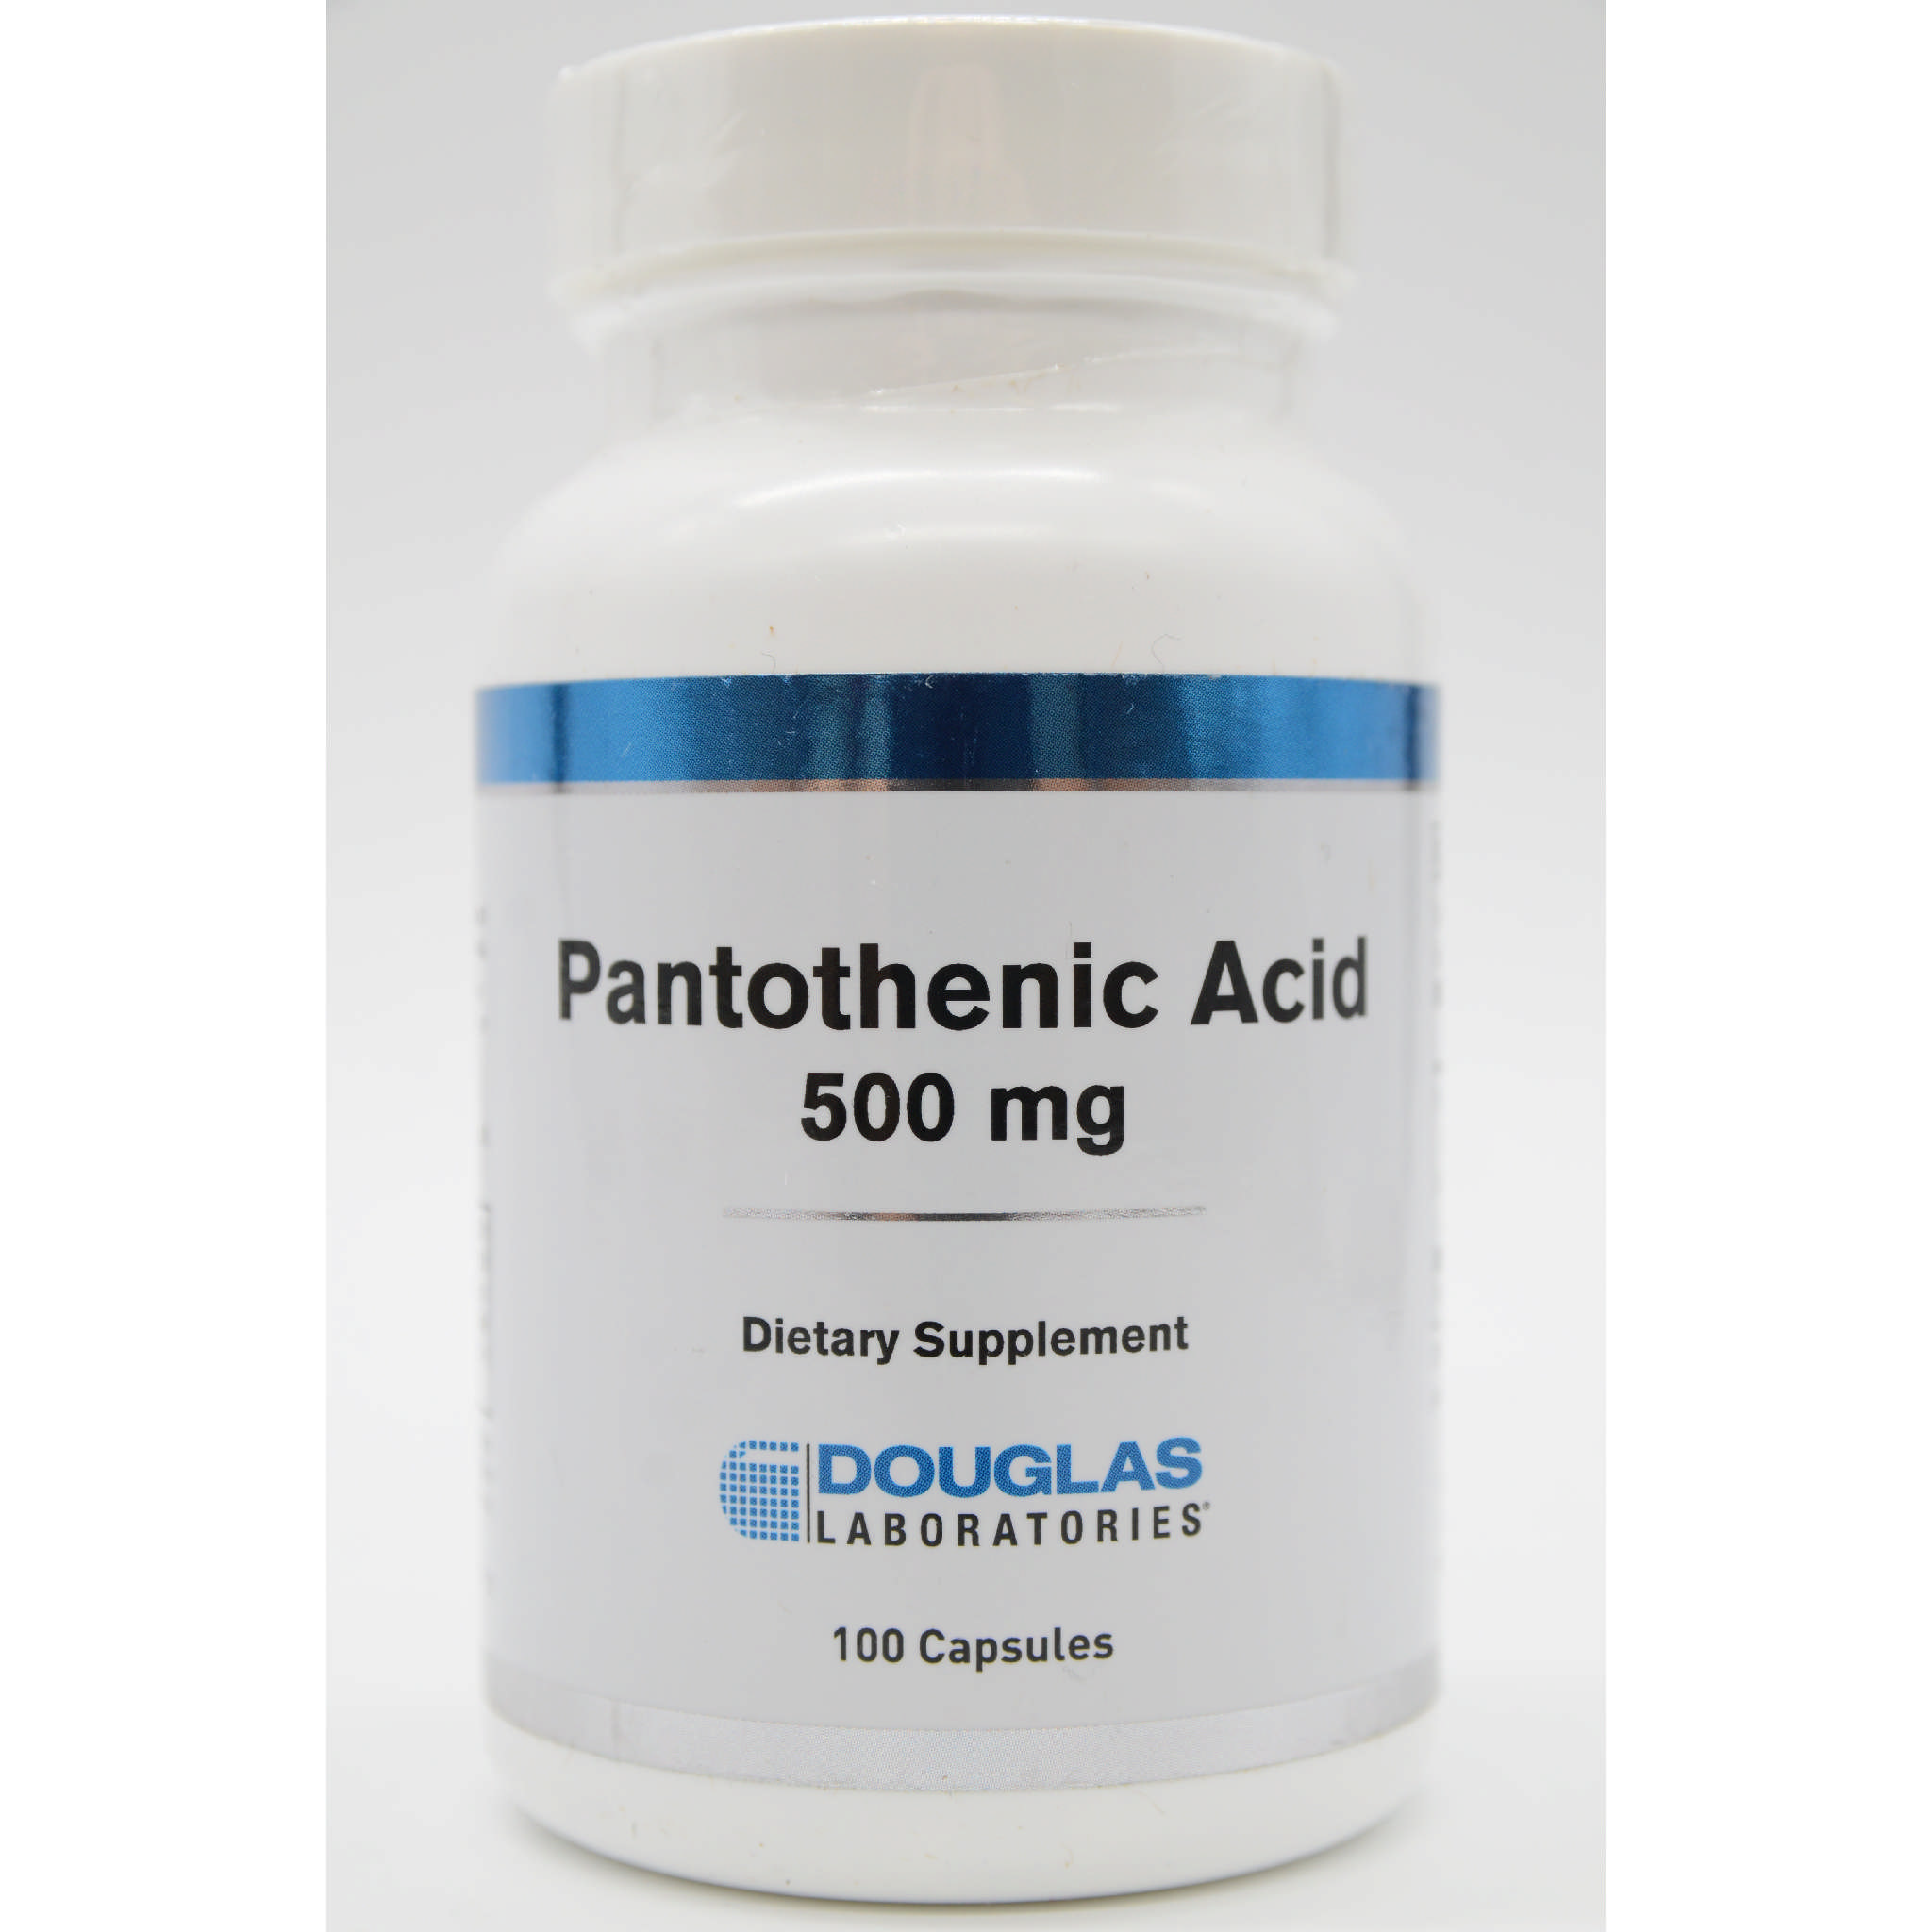 Douglas Laboratories - Pantothenic Acid 500 mg